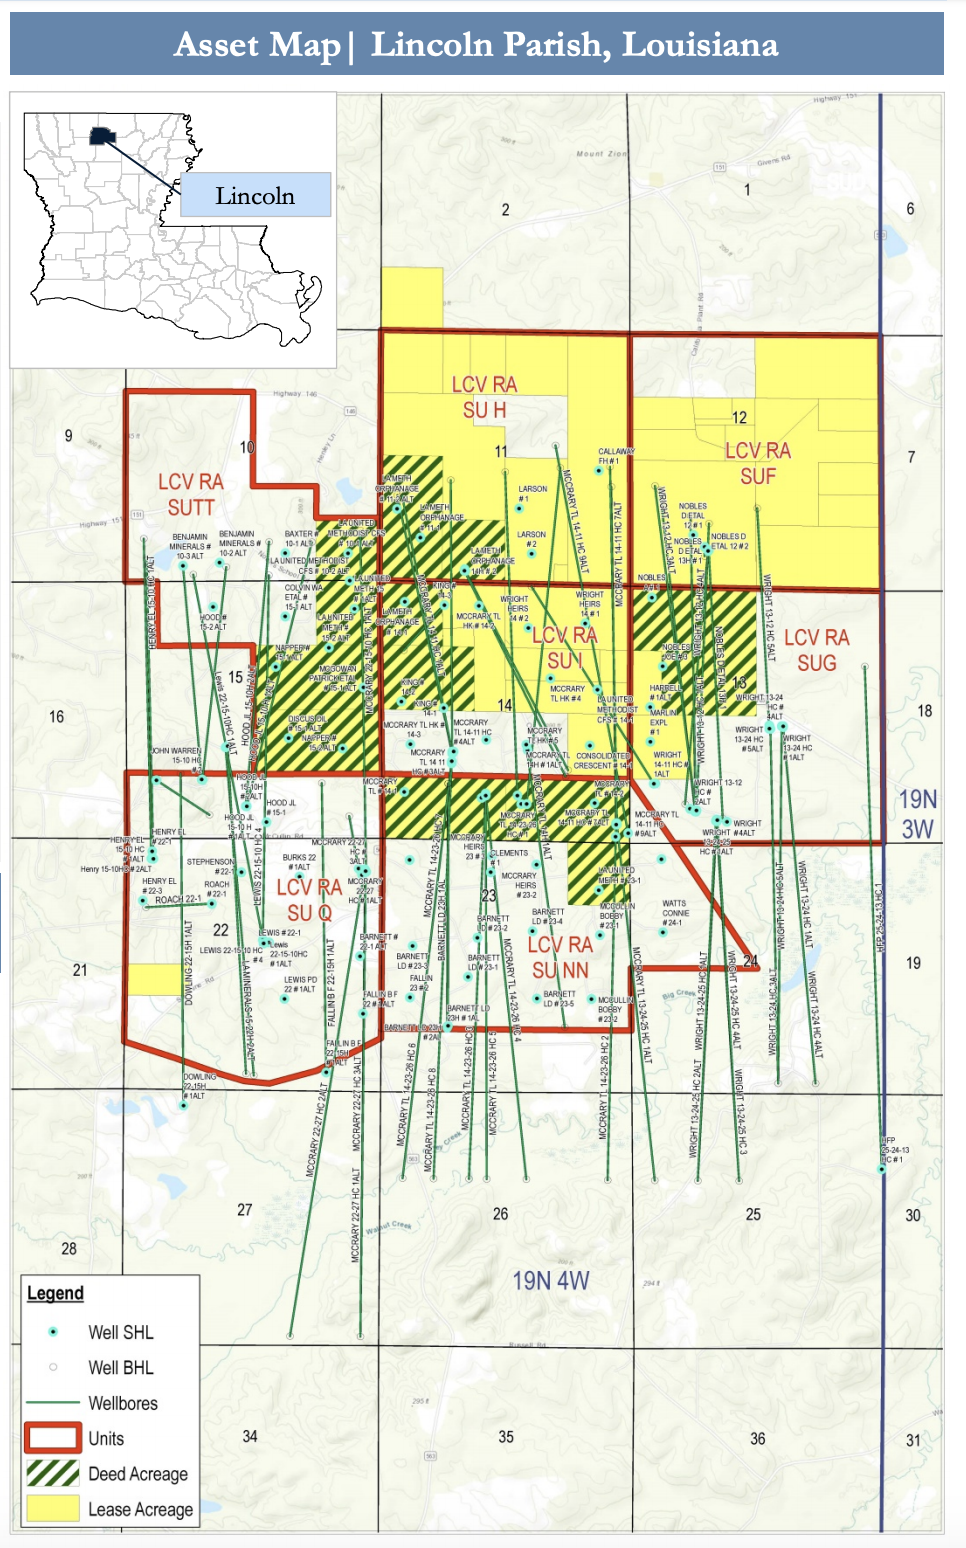 Jetta Operating Core Louisiana Terryville Asset Map (Source: PetroDivest Advisors)